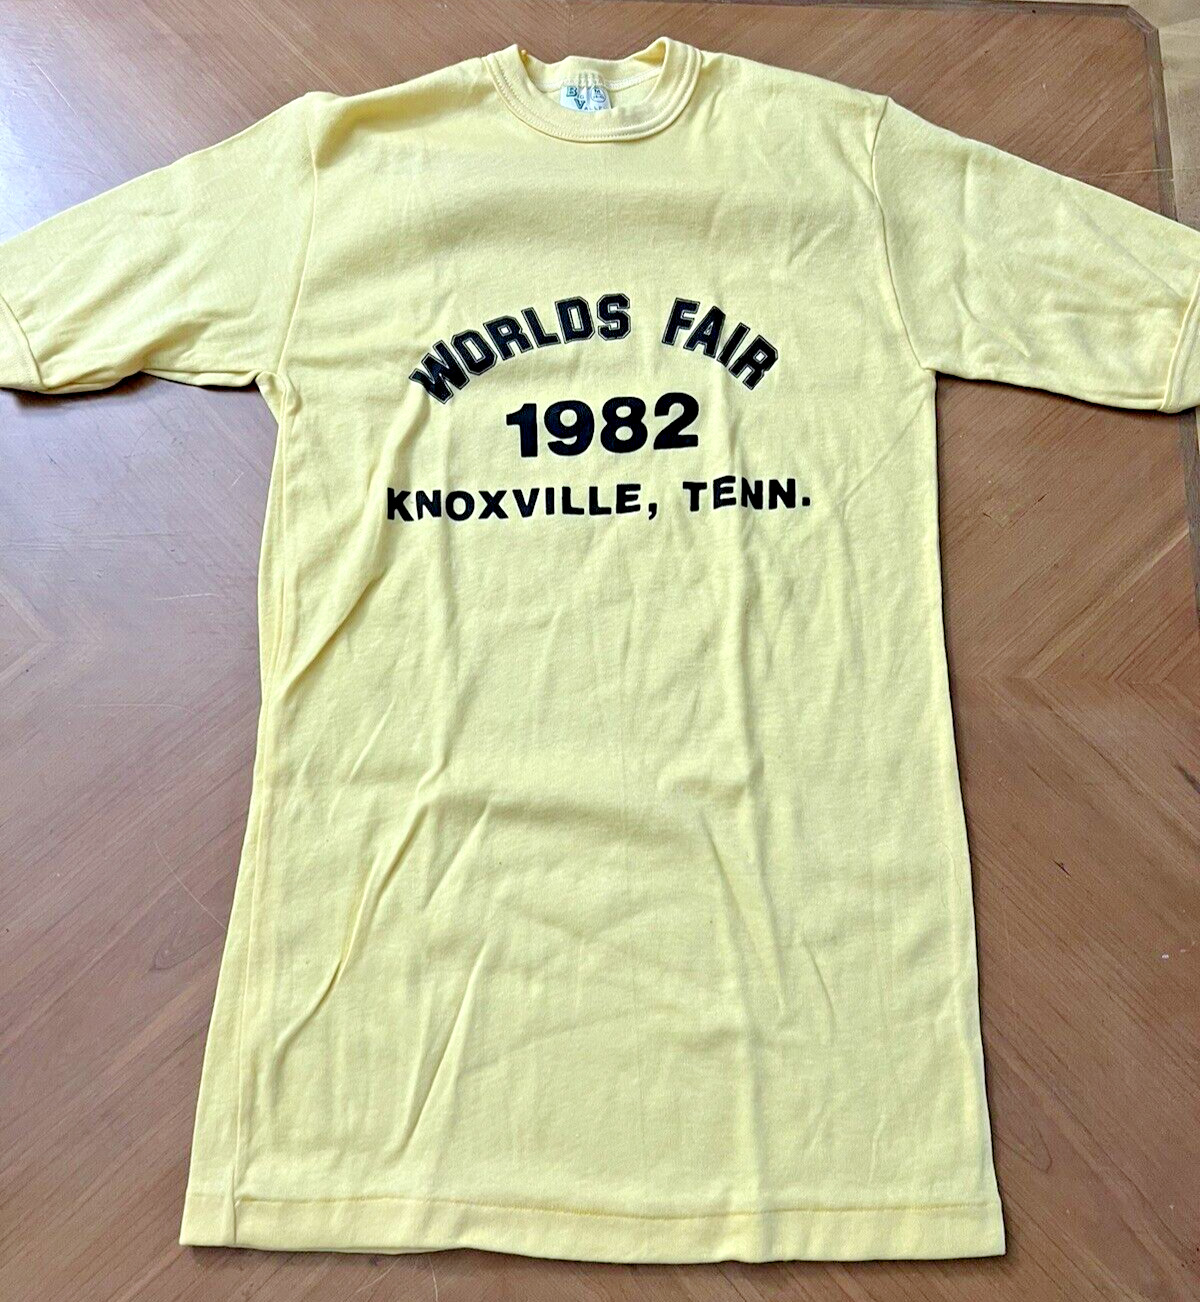 Vintage Authentic 1982 World’s Fair Knoxville, TN T-Shirt Size M (Never Worn)